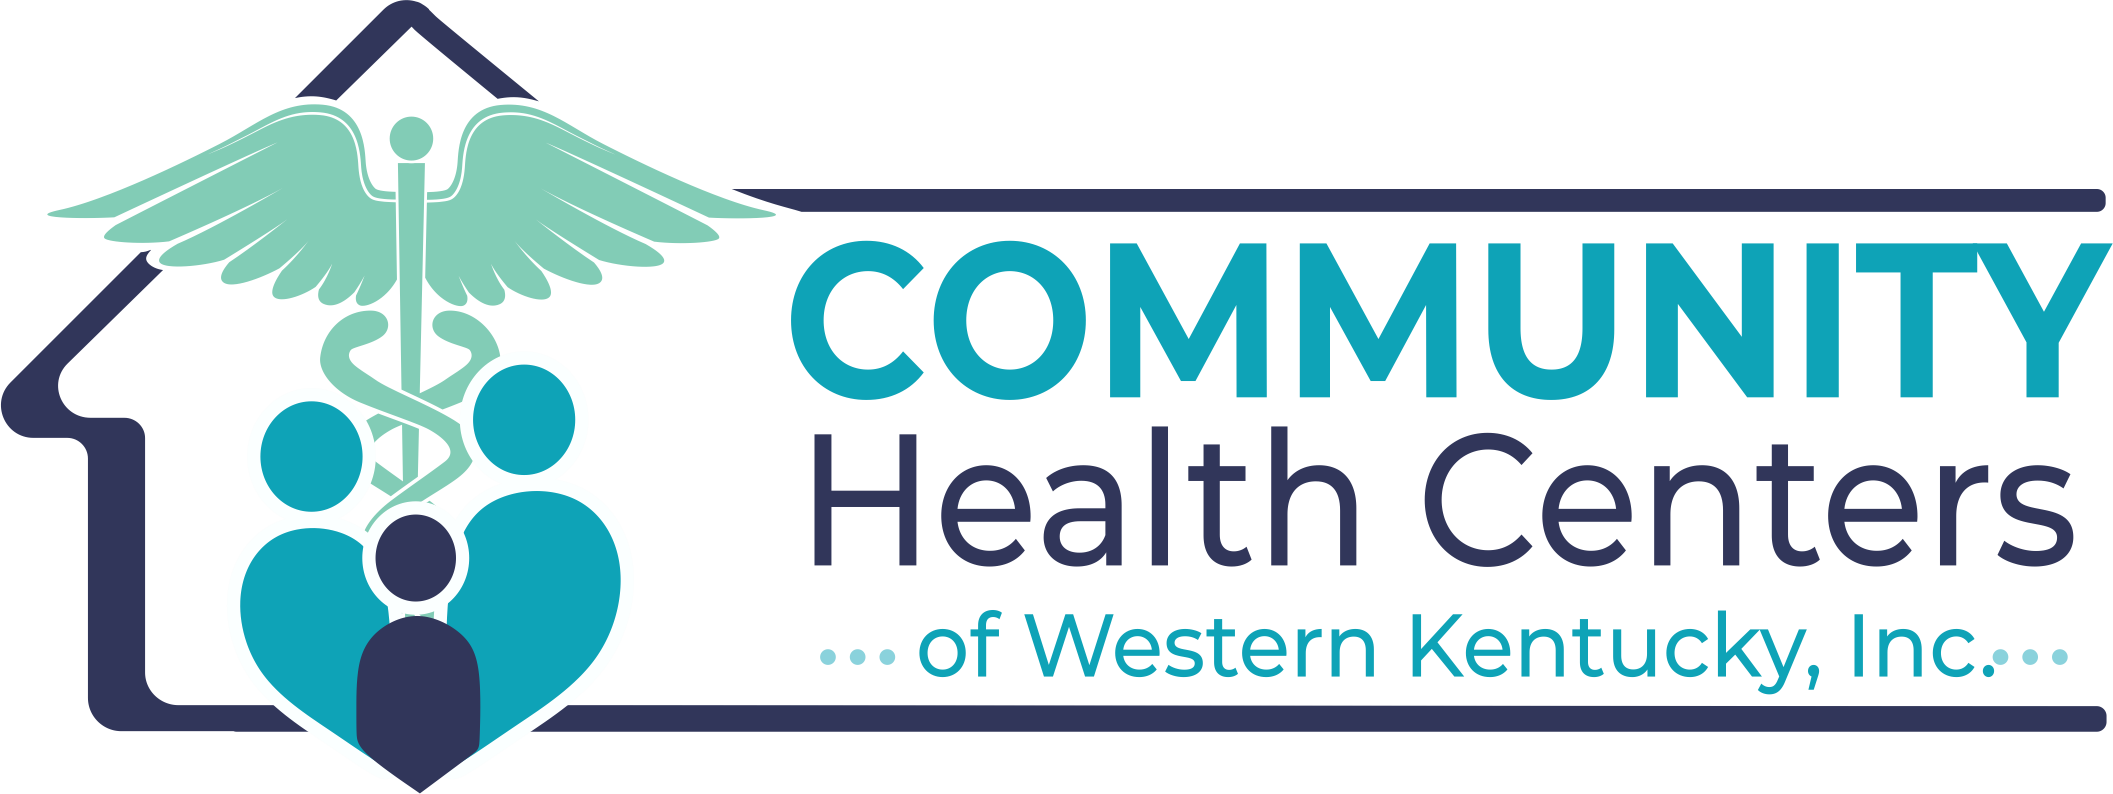 Community Health Centers logo